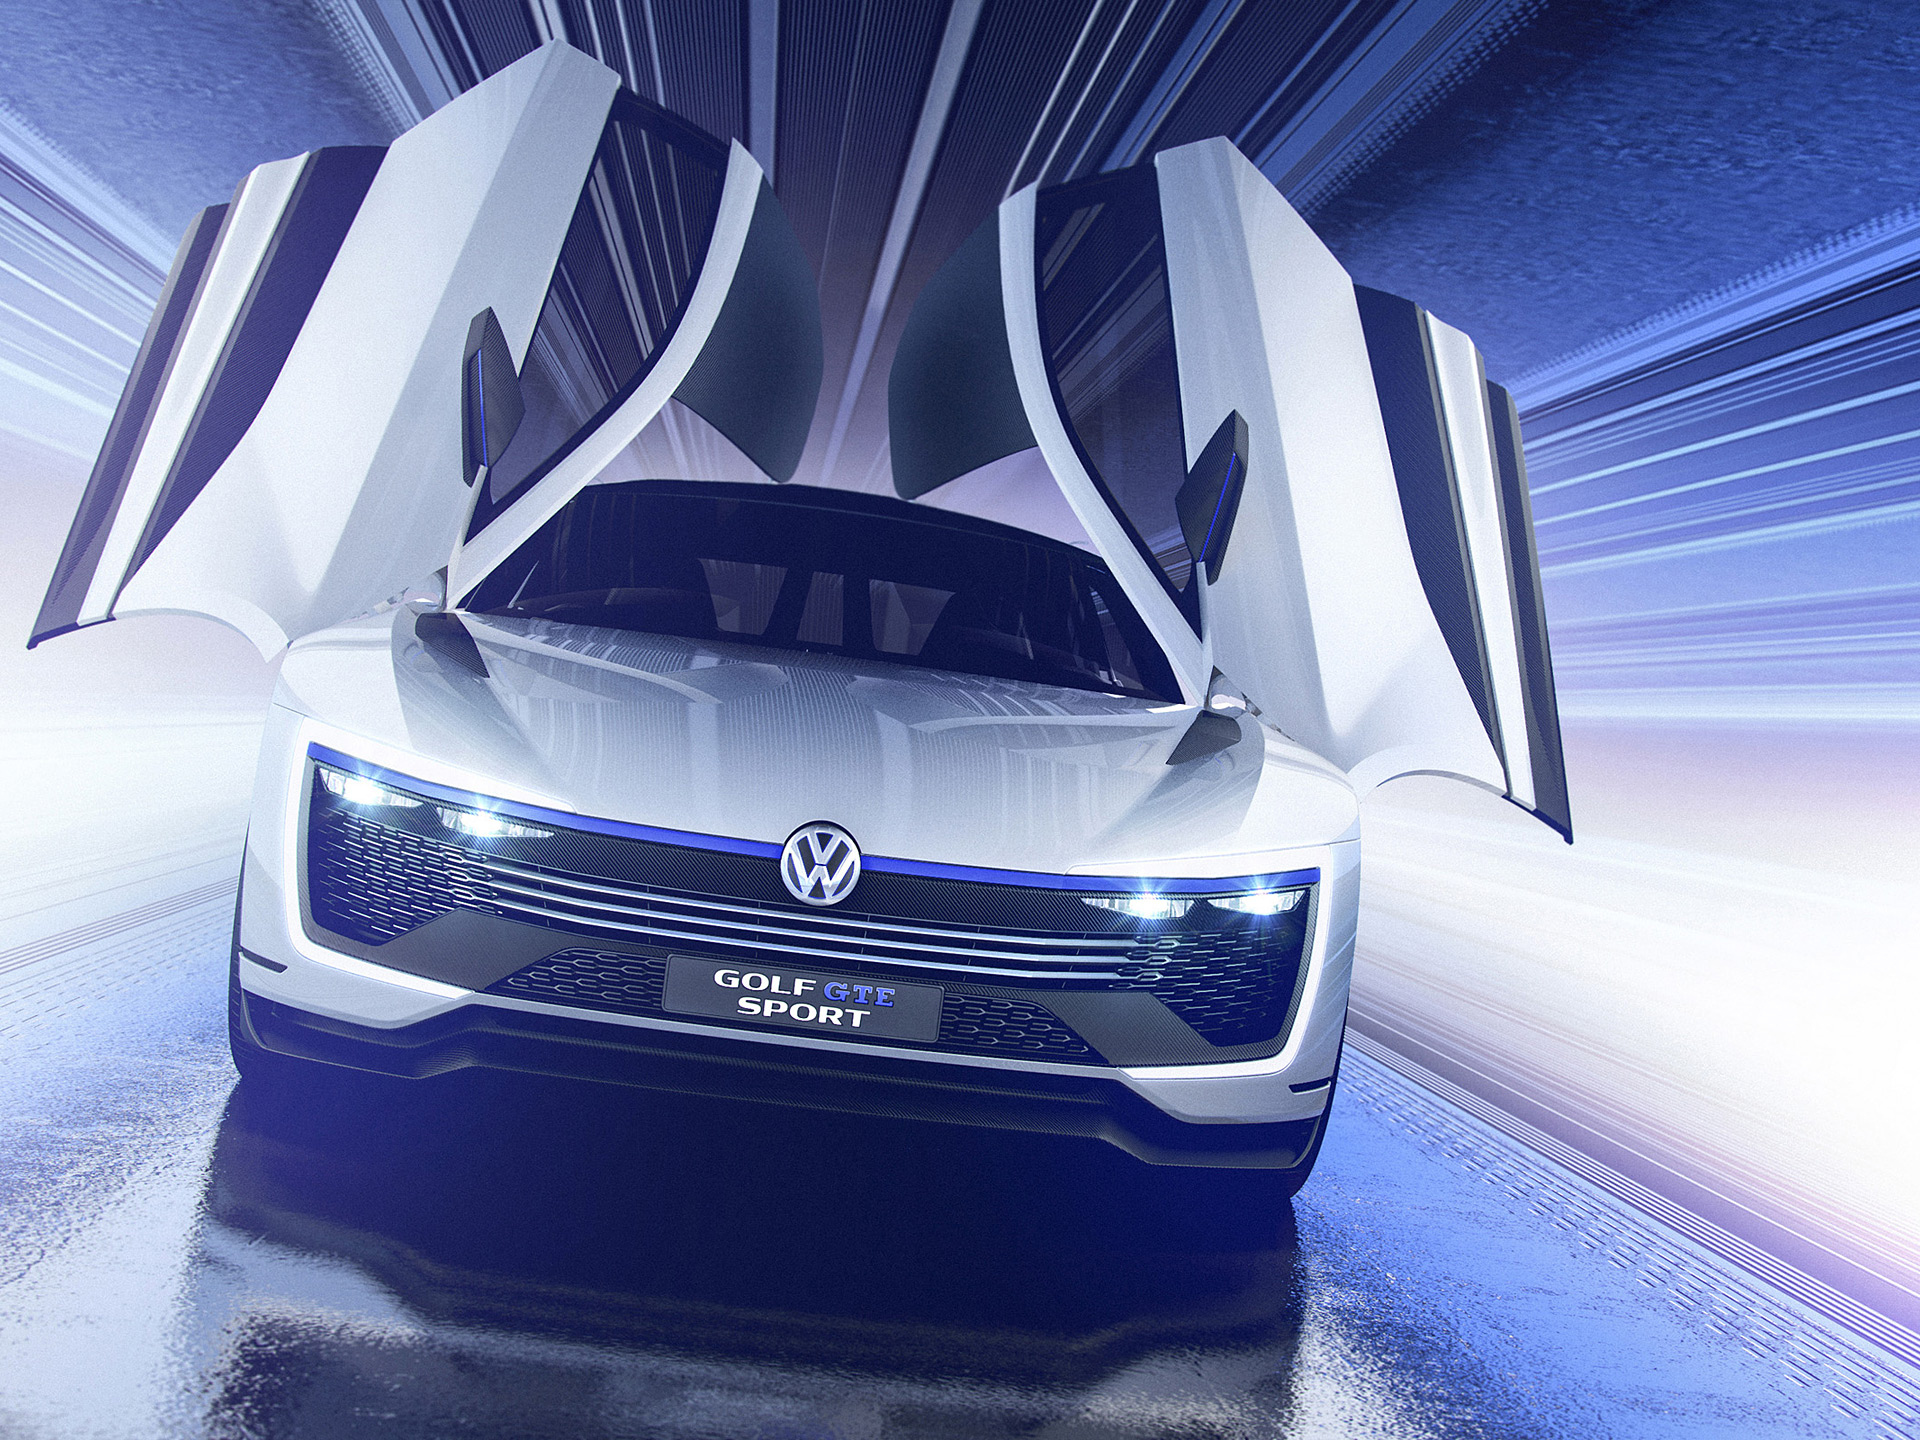  2015 Volkswagen Golf GTE Sport Concept Wallpaper.